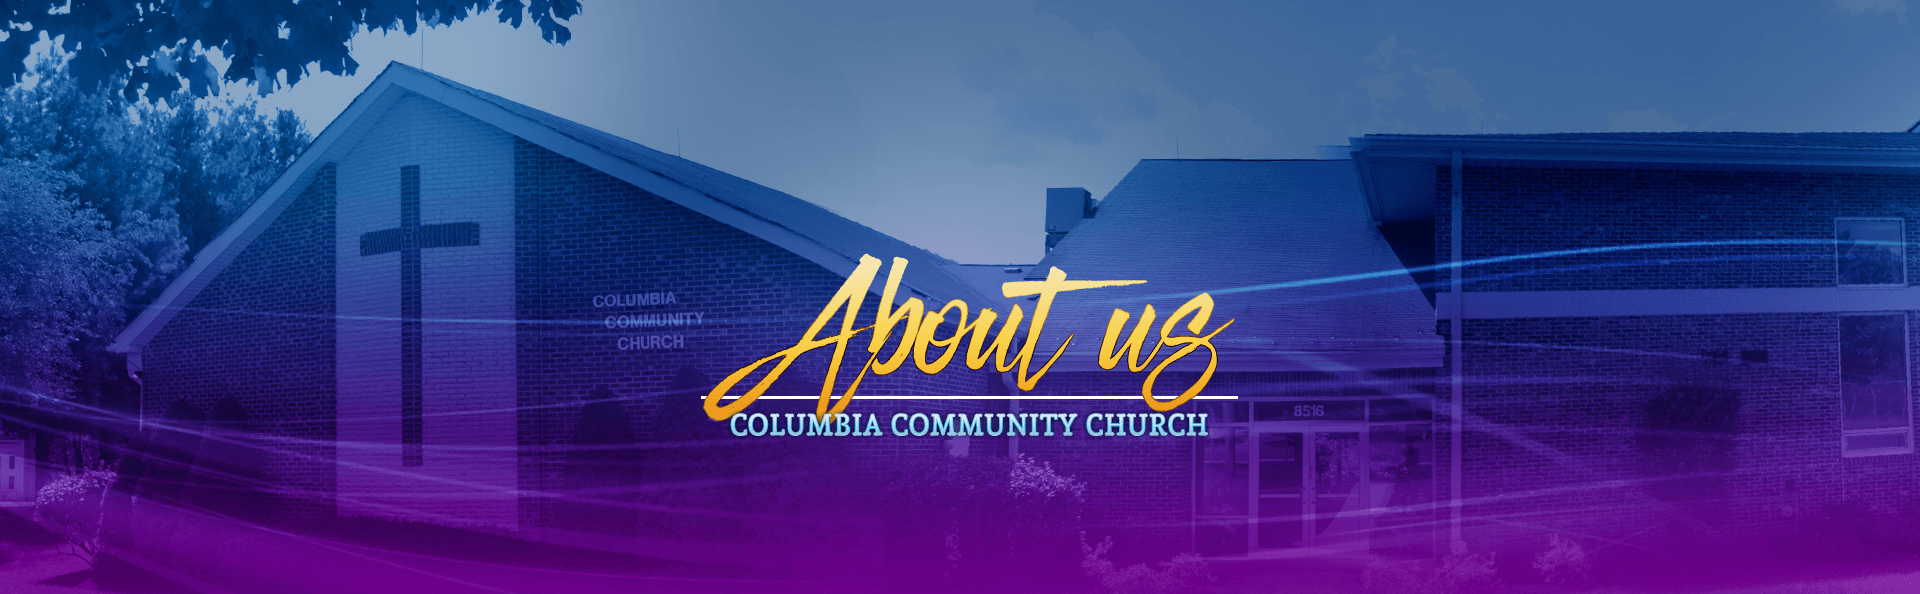 media Columbia community church